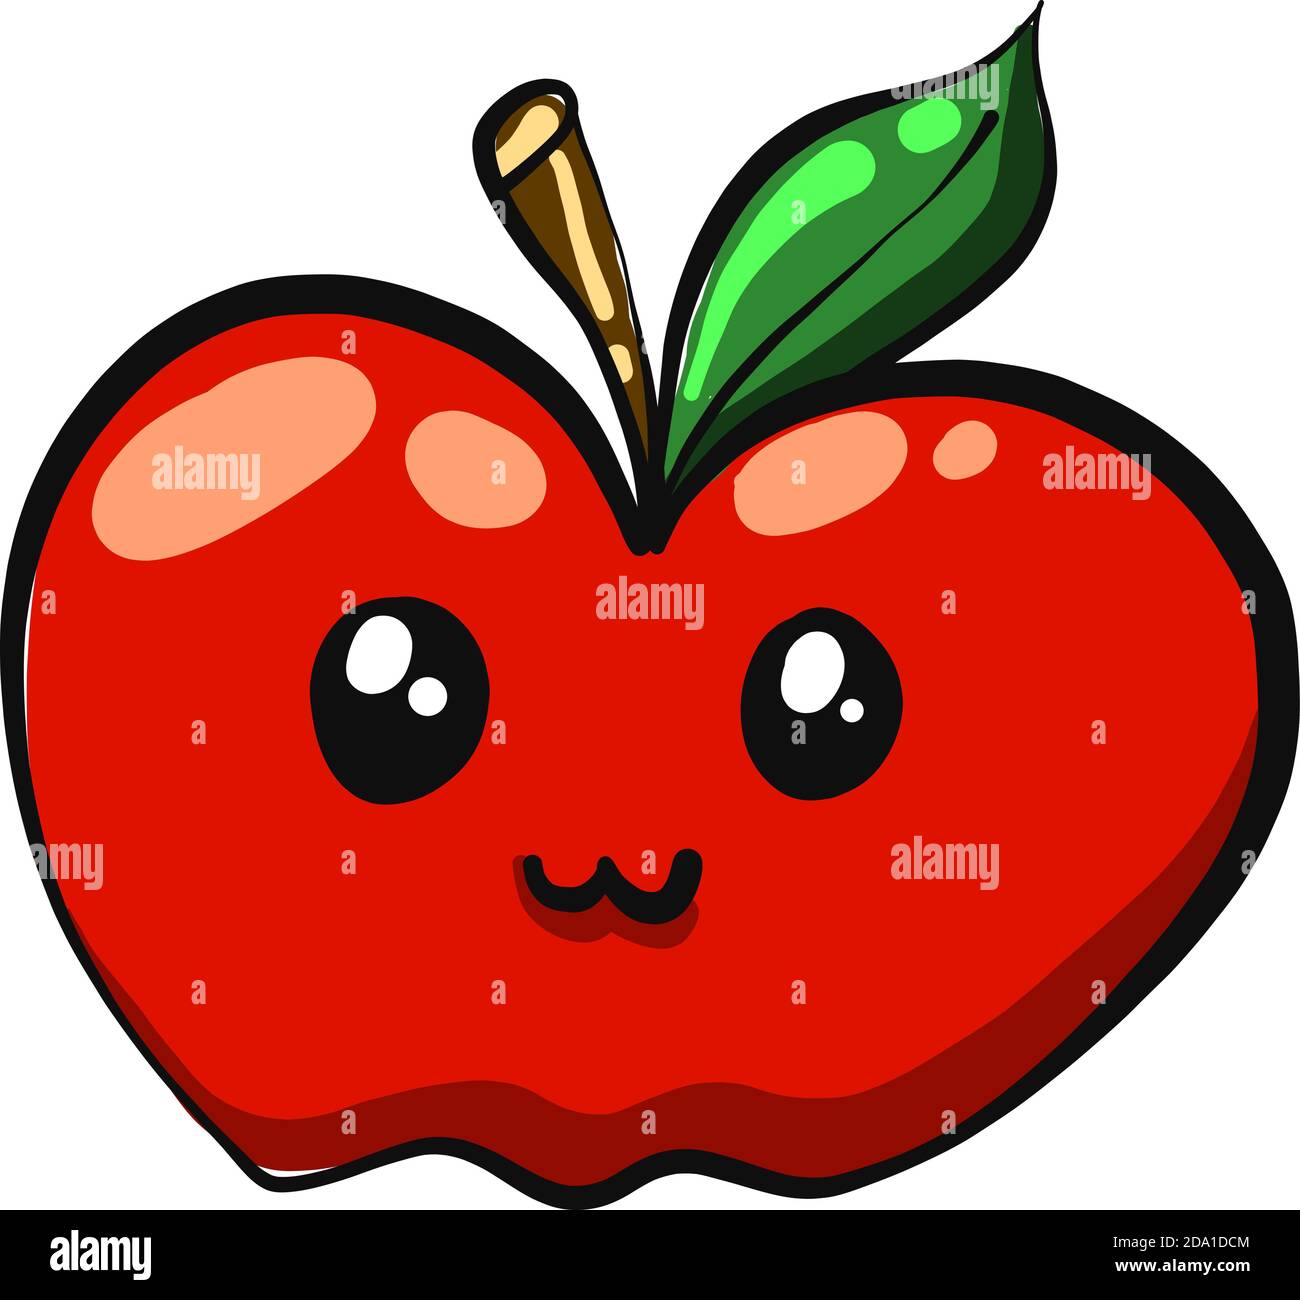 https://c8.alamy.com/comp/2DA1DCM/red-apple-with-eyesillustrationvector-on-white-background-2DA1DCM.jpg